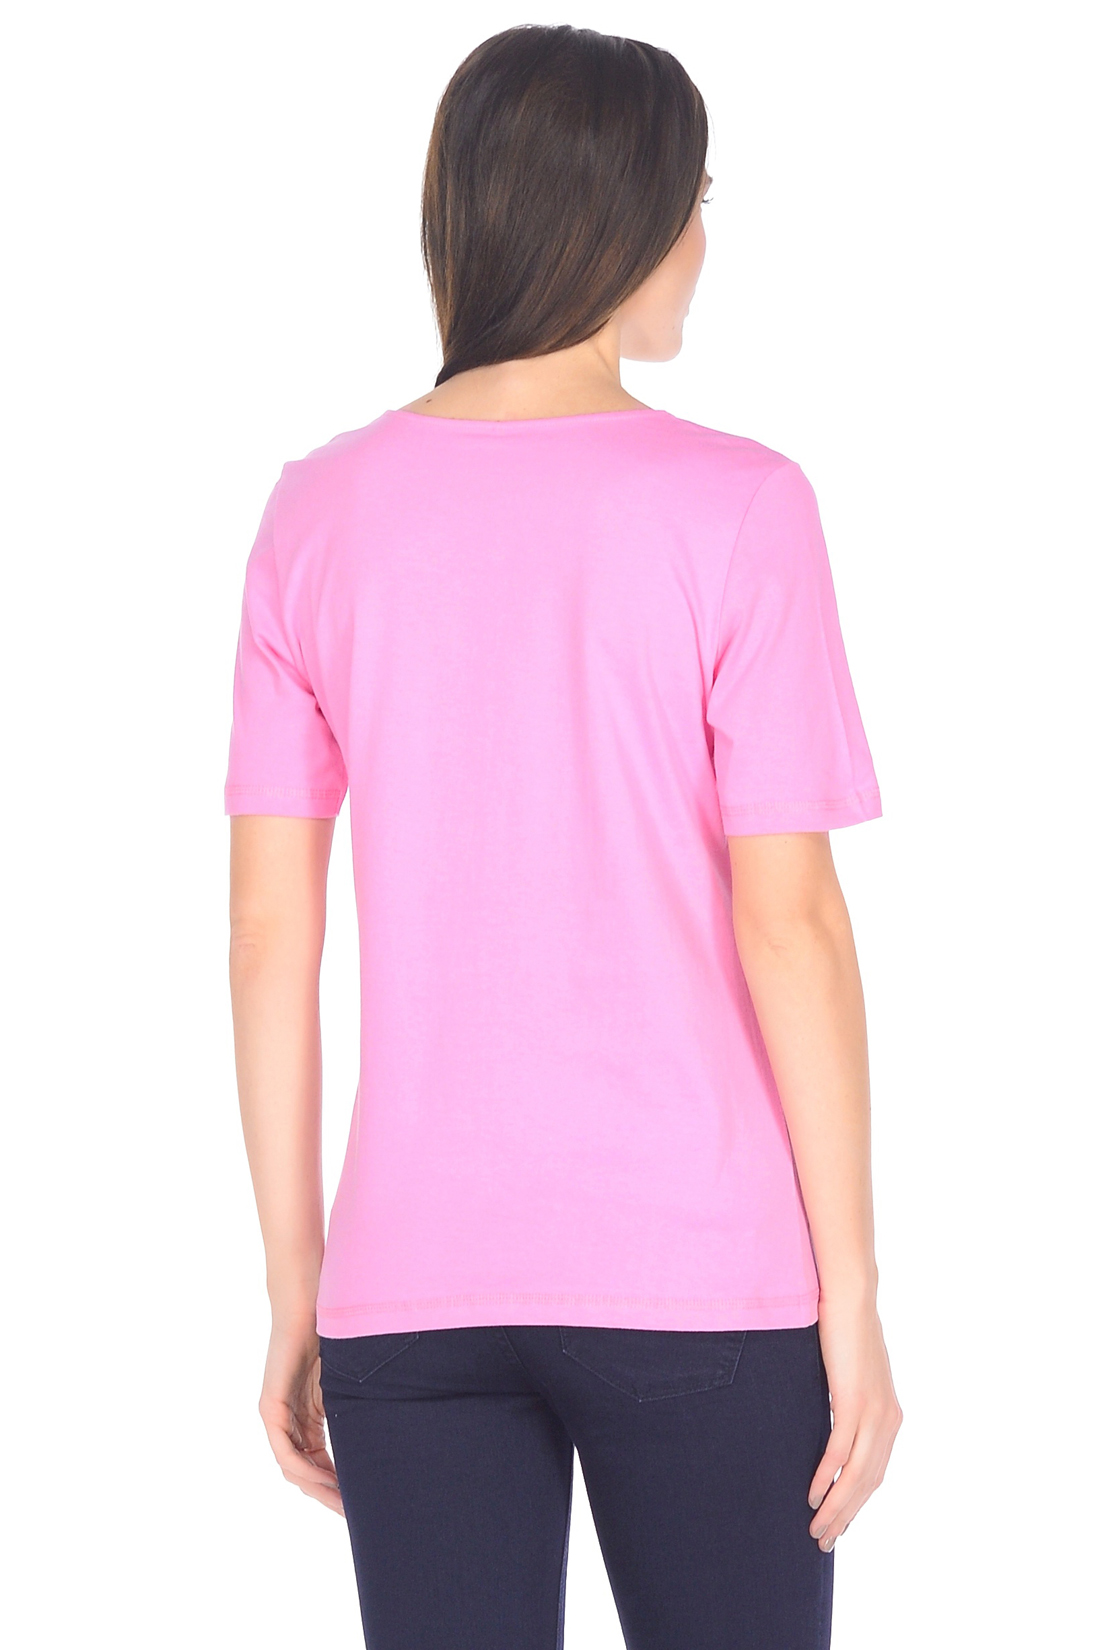 Розовая футболка с принтом (арт. baon B238069), размер S, цвет розовый Розовая футболка с принтом (арт. baon B238069) - фото 2